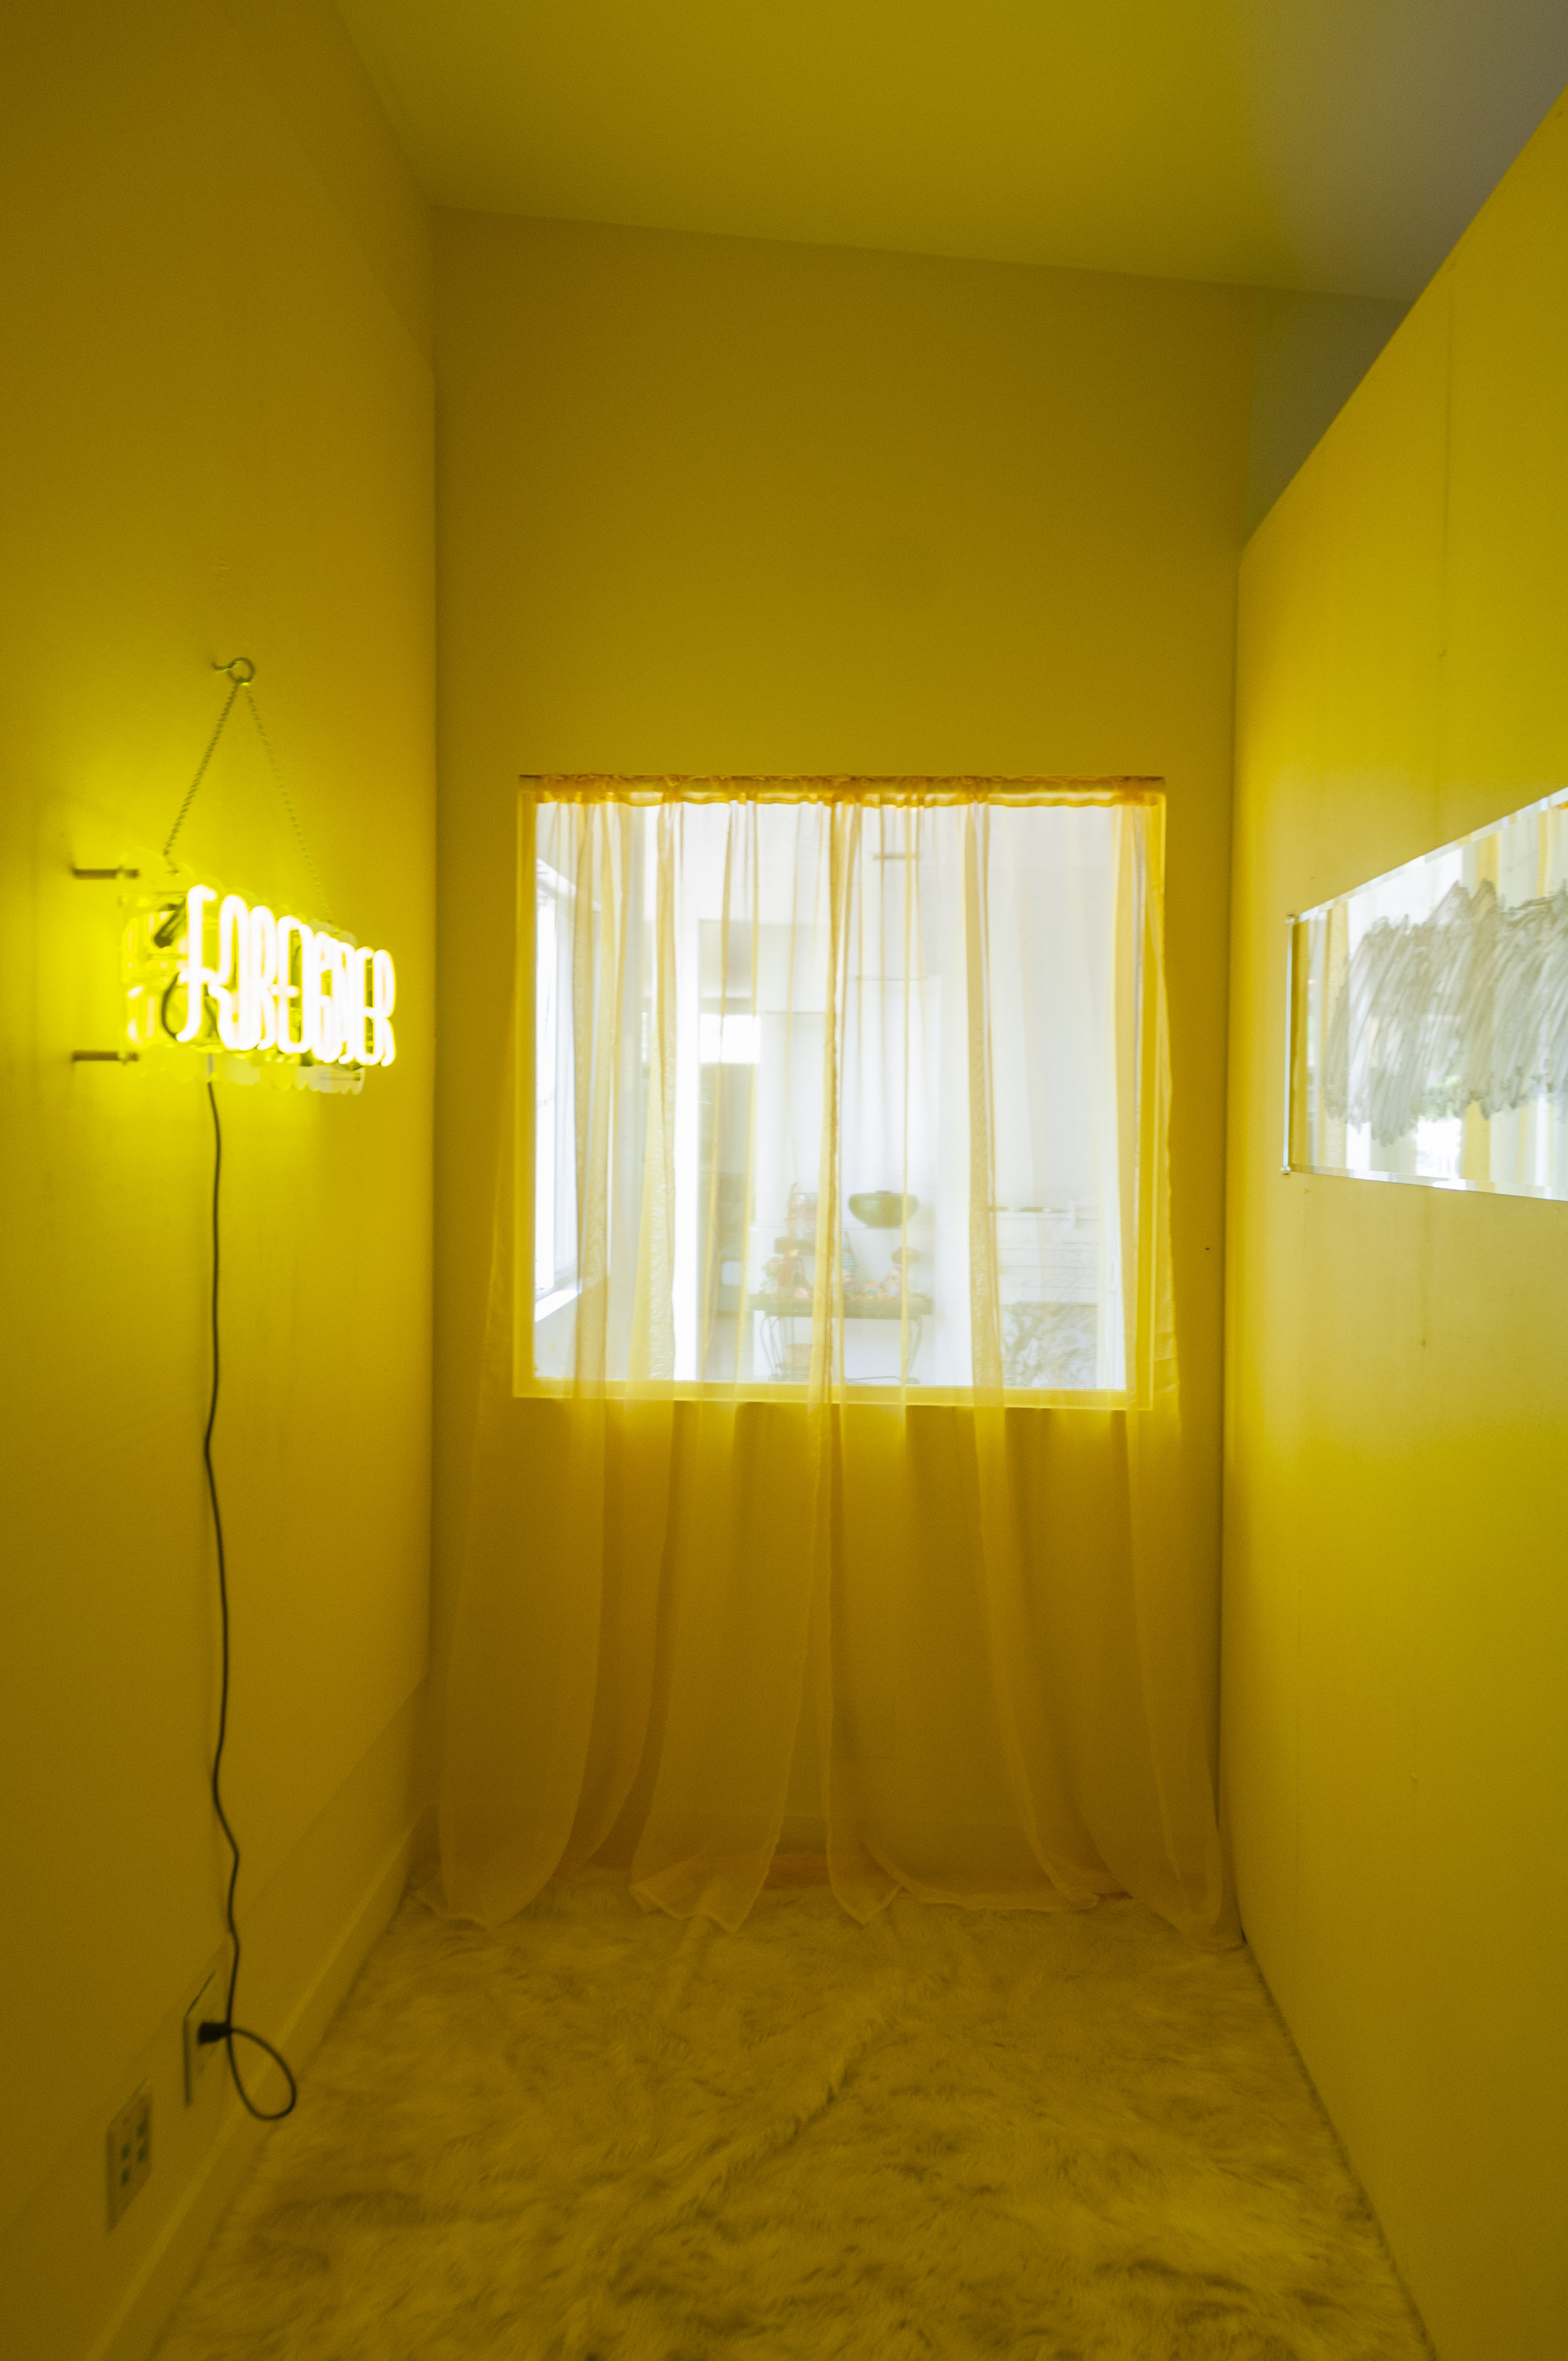  Koreatown Comfort  Multimedia installation: yellow paint, FOREIGNER custom neon sign, mirror, acrylic paint, yellow curtains, shag rug, custom made stud wall.   180” x 84” x 96”   Installation view. 